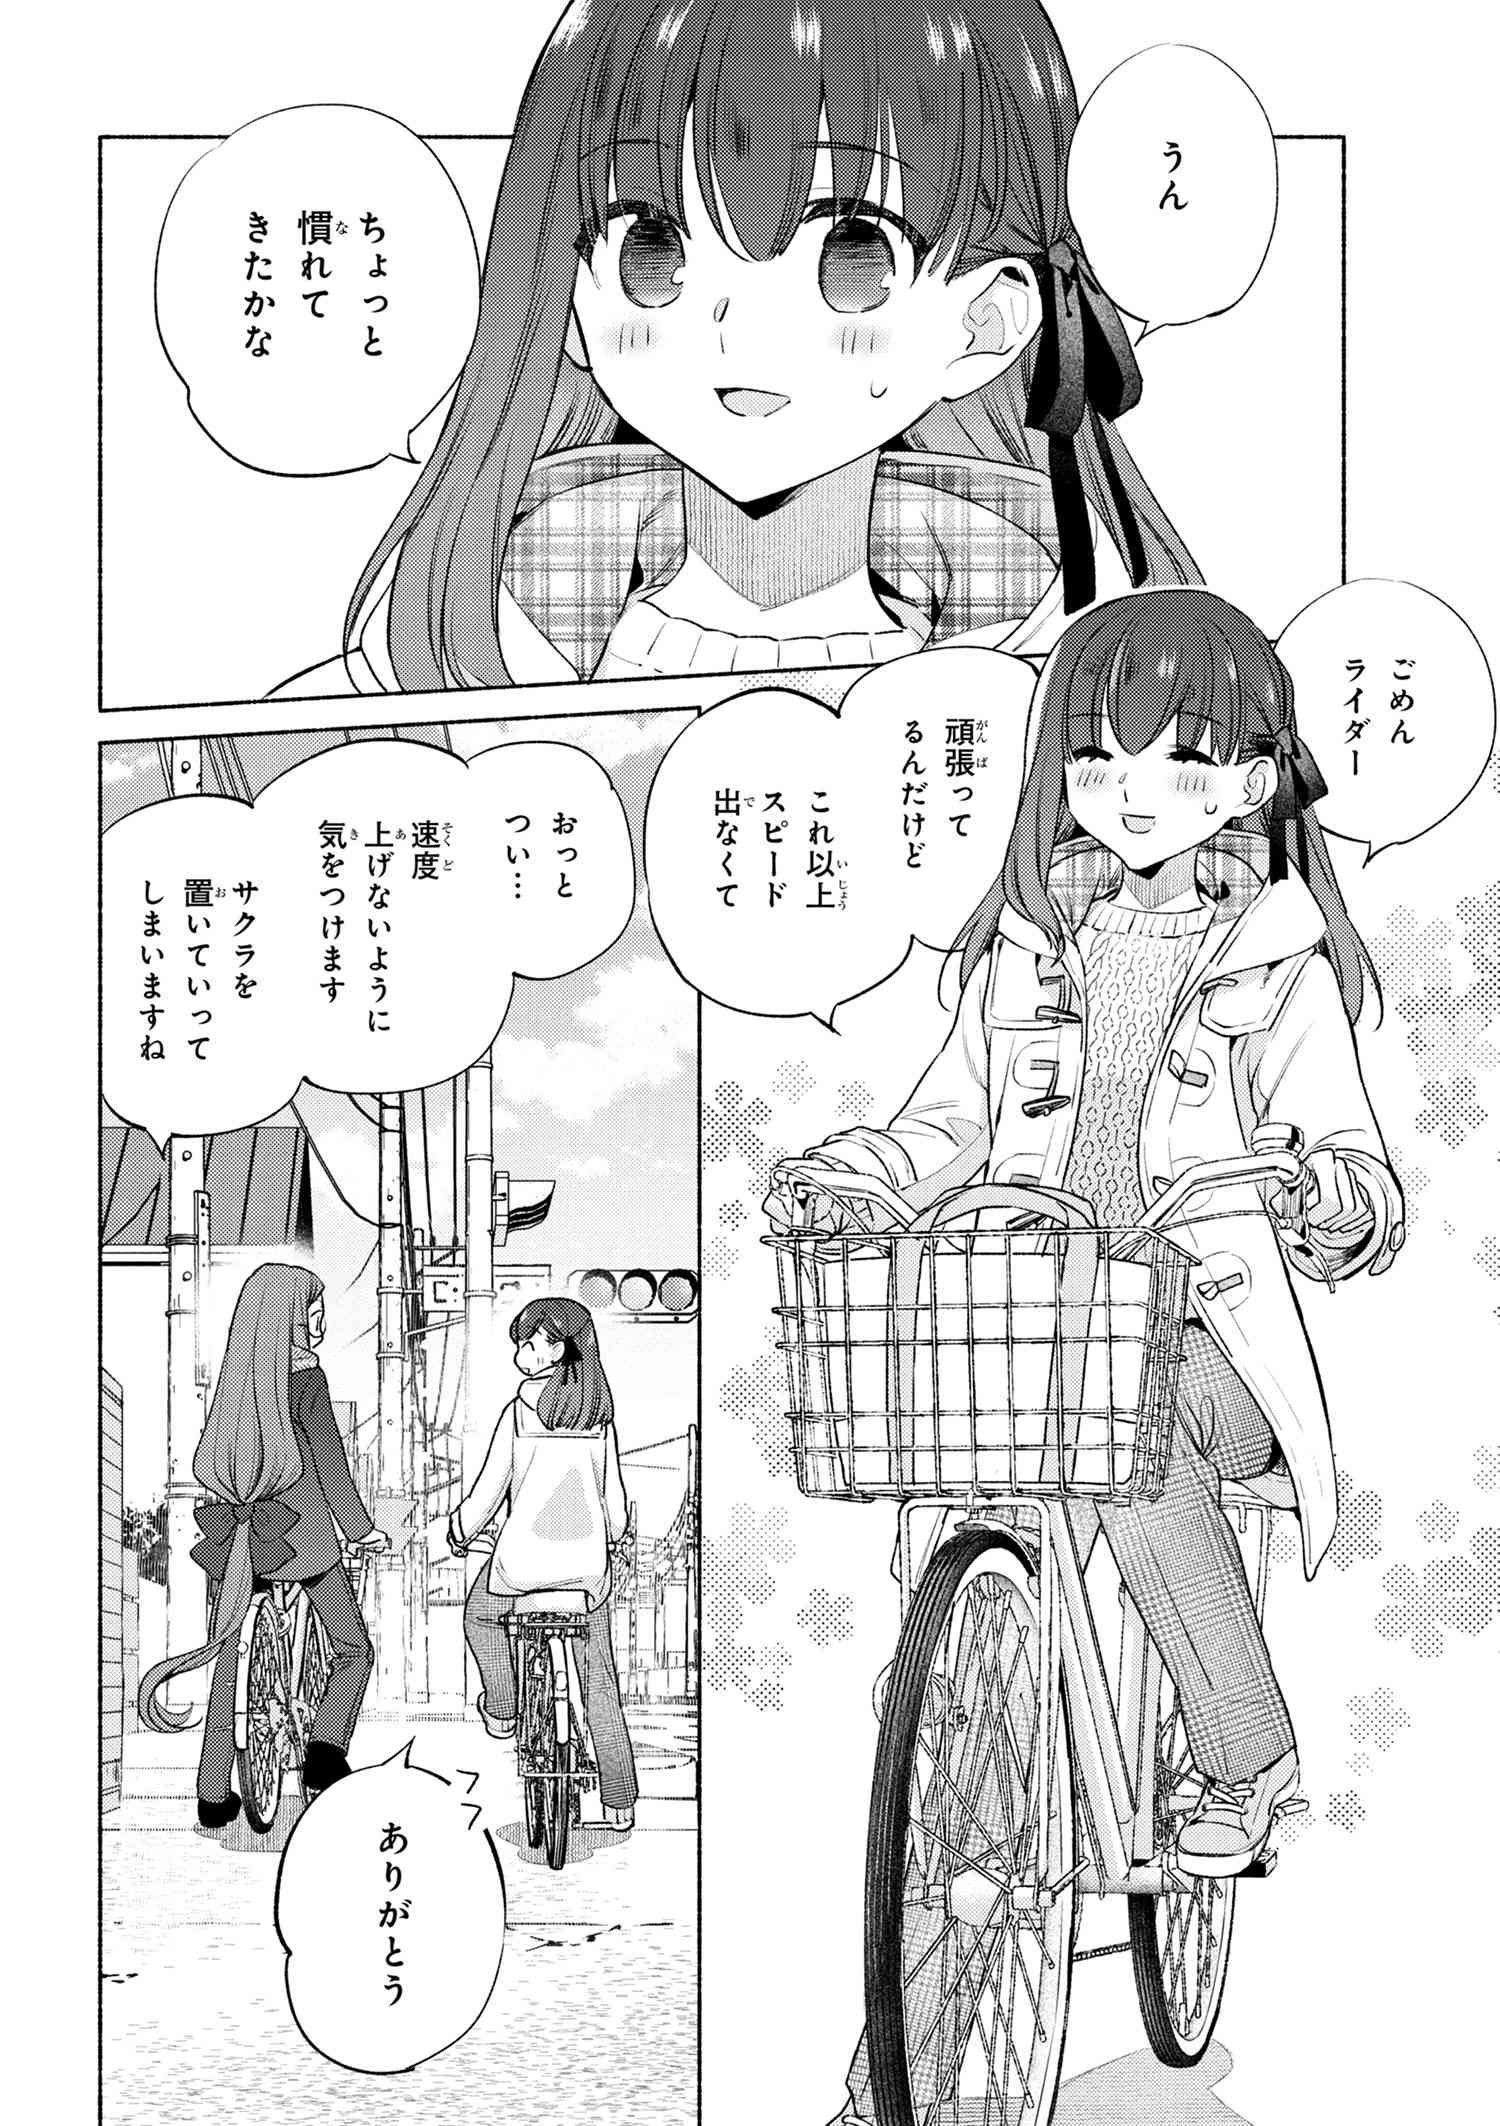 Emiya-san Chi no Kyou no Gohan - Chapter 60 - Page 2